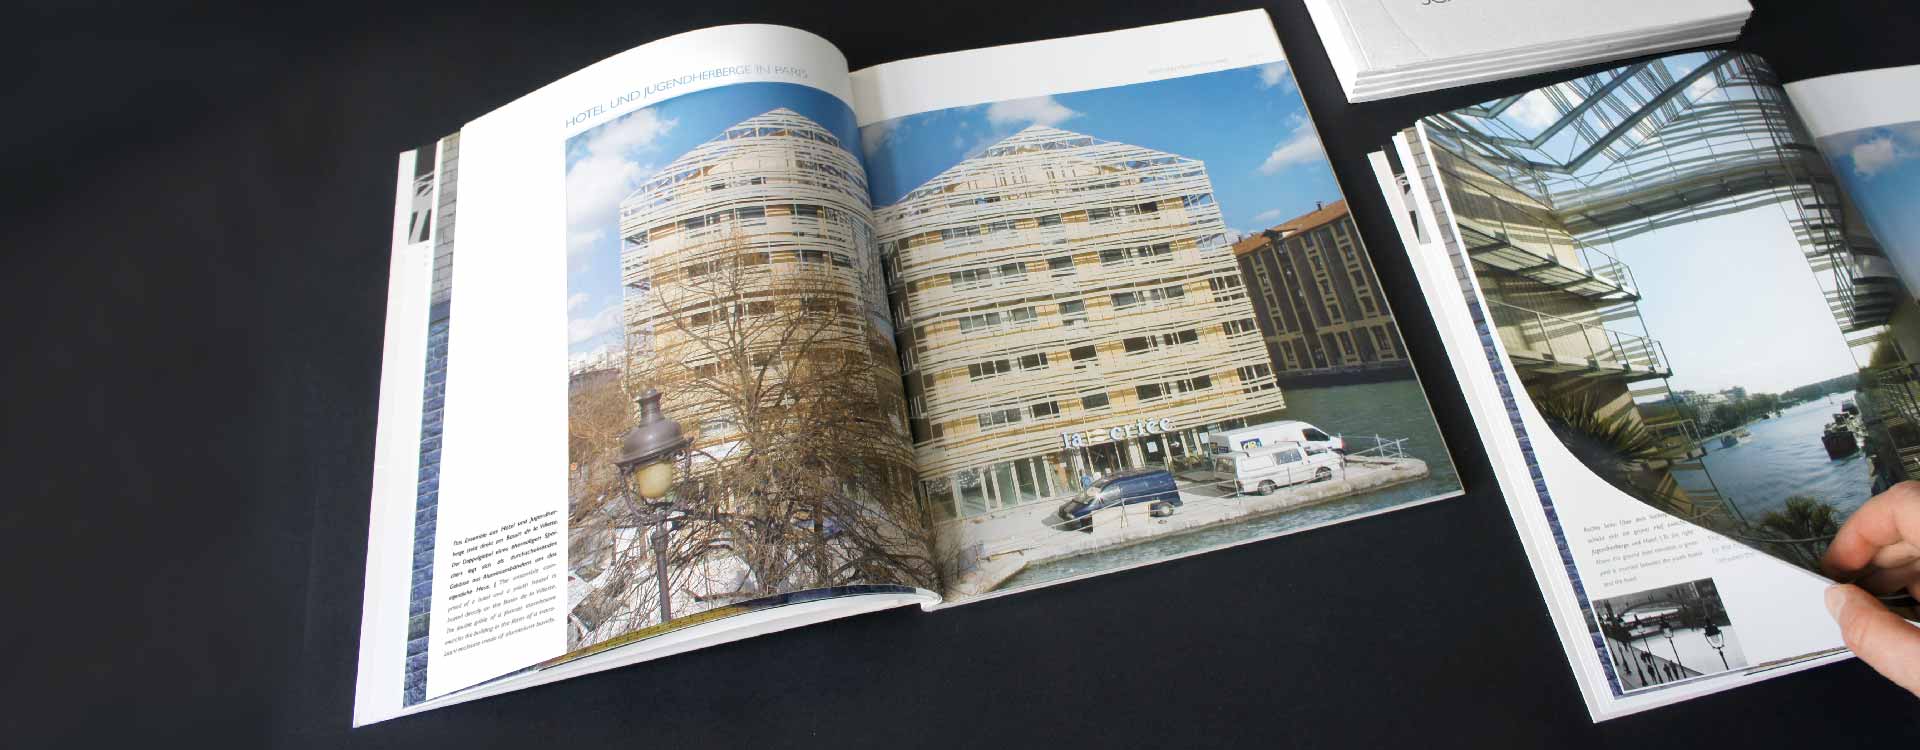 Inside pages of image brochure for JSWD Architekten, Köln; Design: Kattrin Richter | Graphic Design Studio